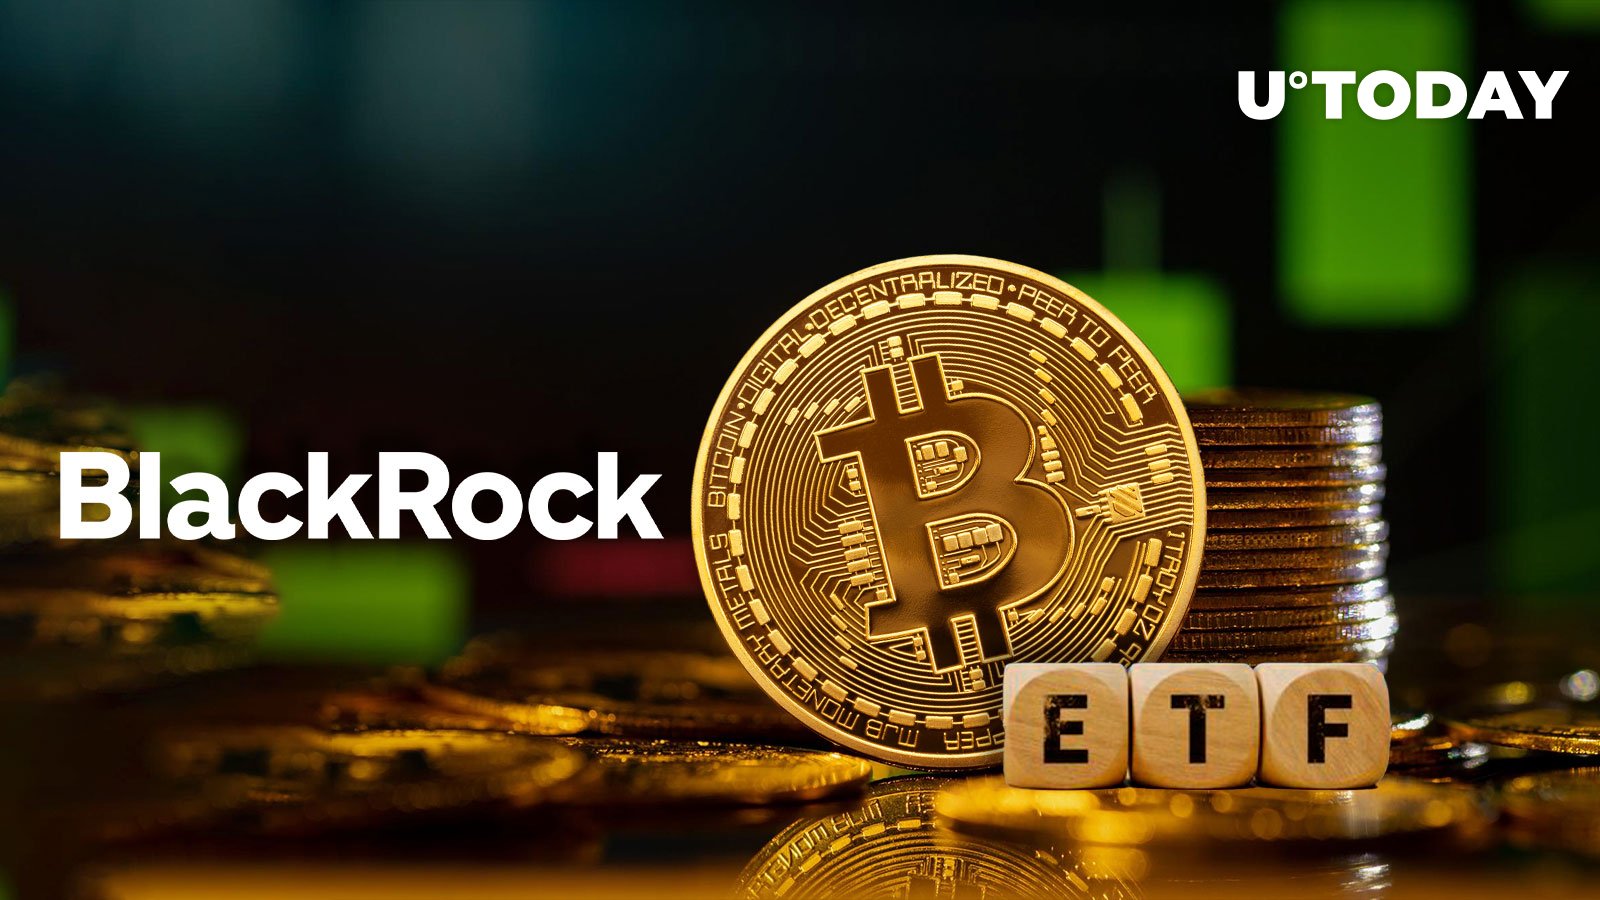 BlackRock’s Bitcoin ETF Ends Inflow Streak as BTC Price Plunges